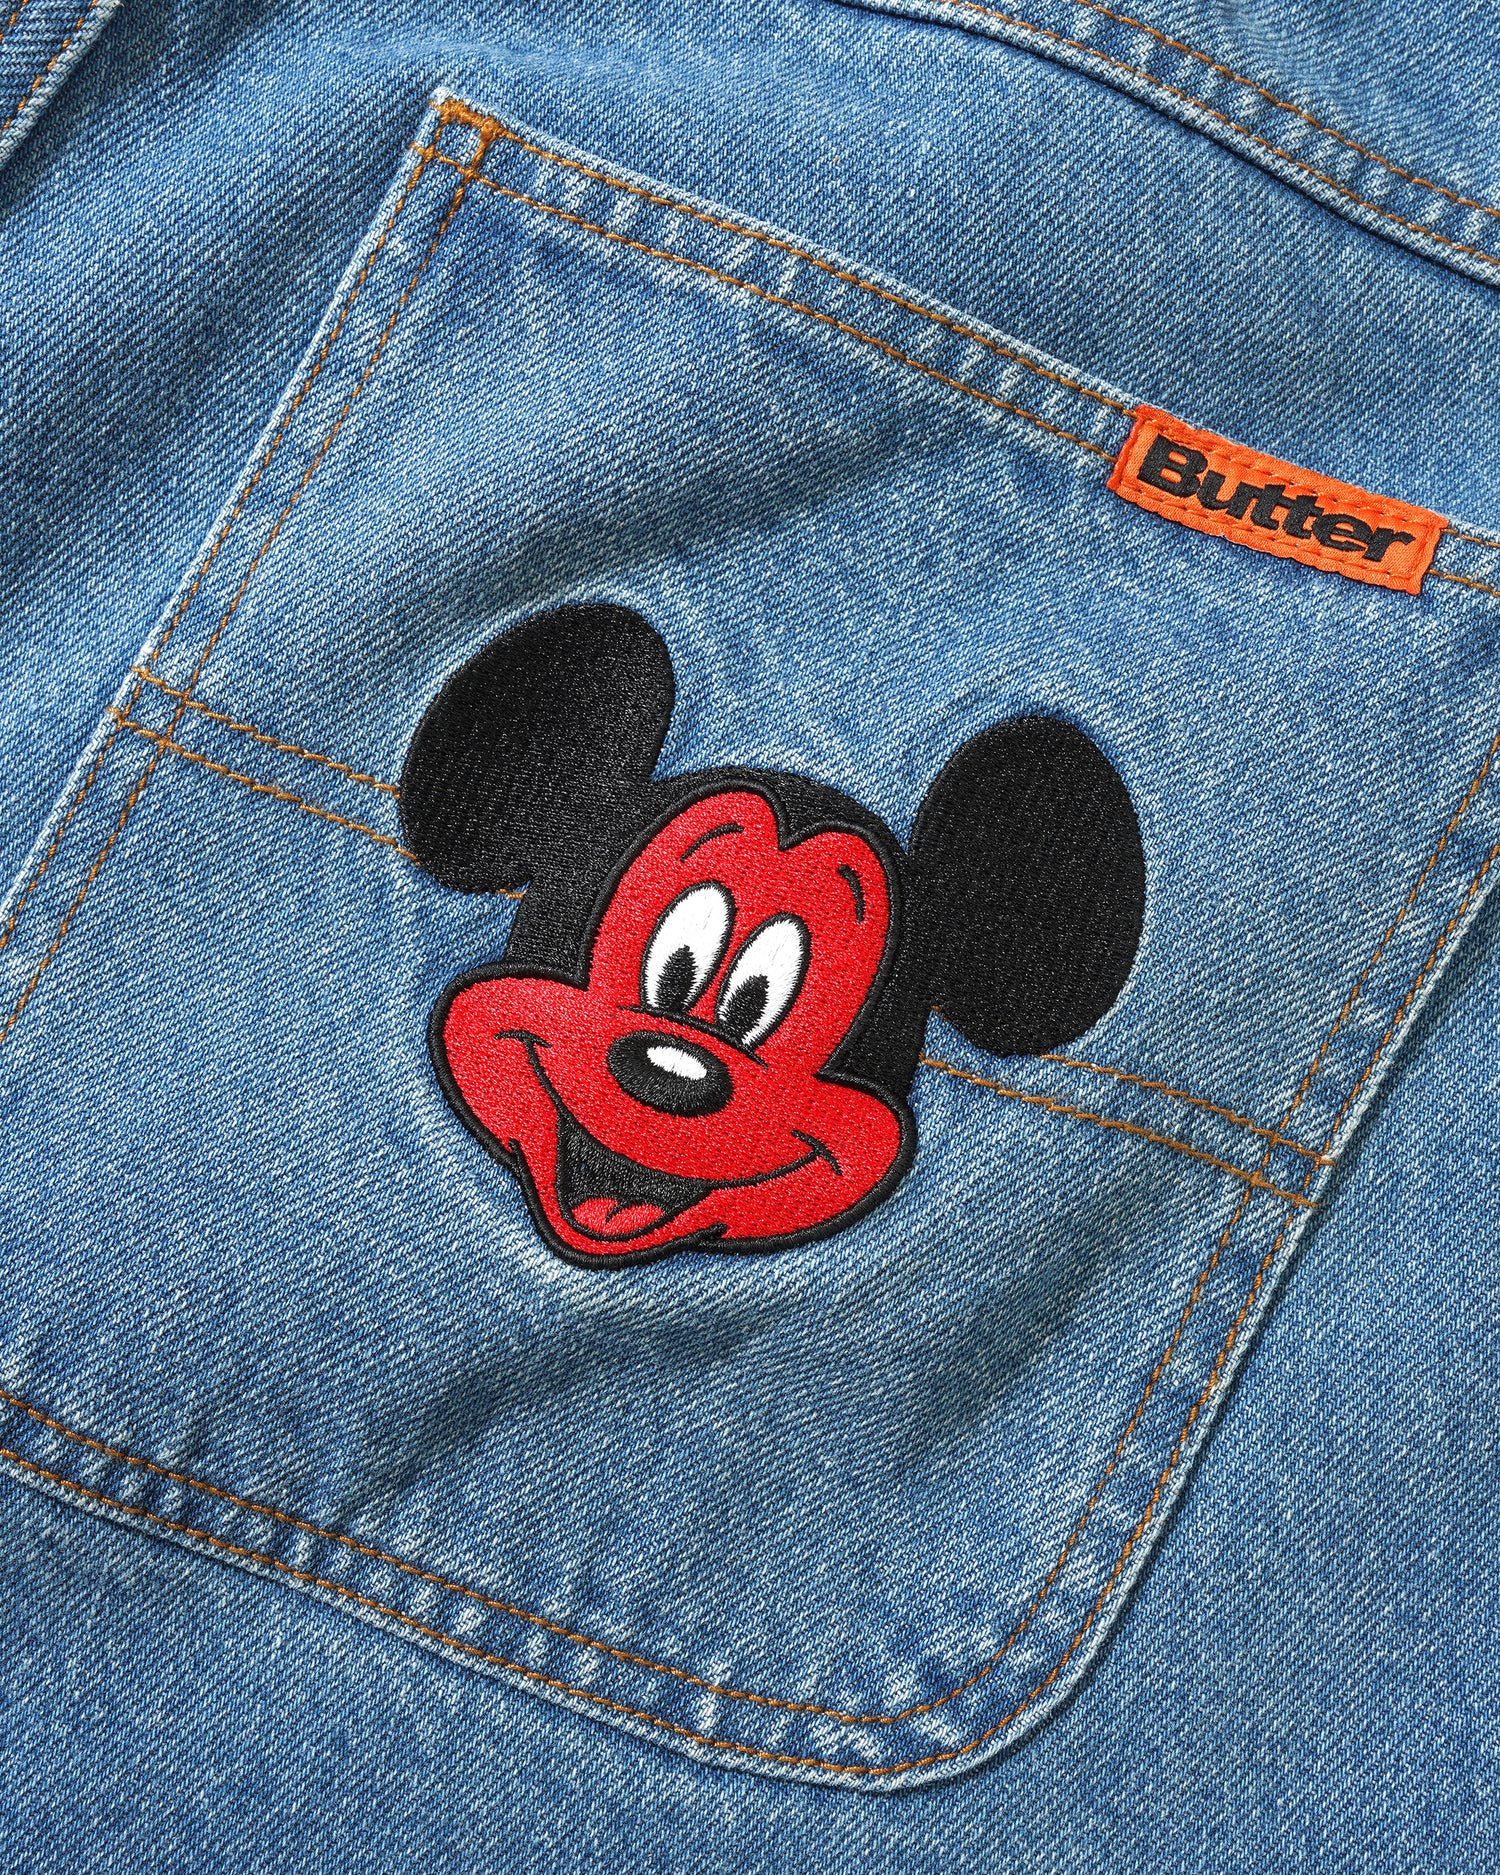 Mickey Denim Jeans, Washed Indigo